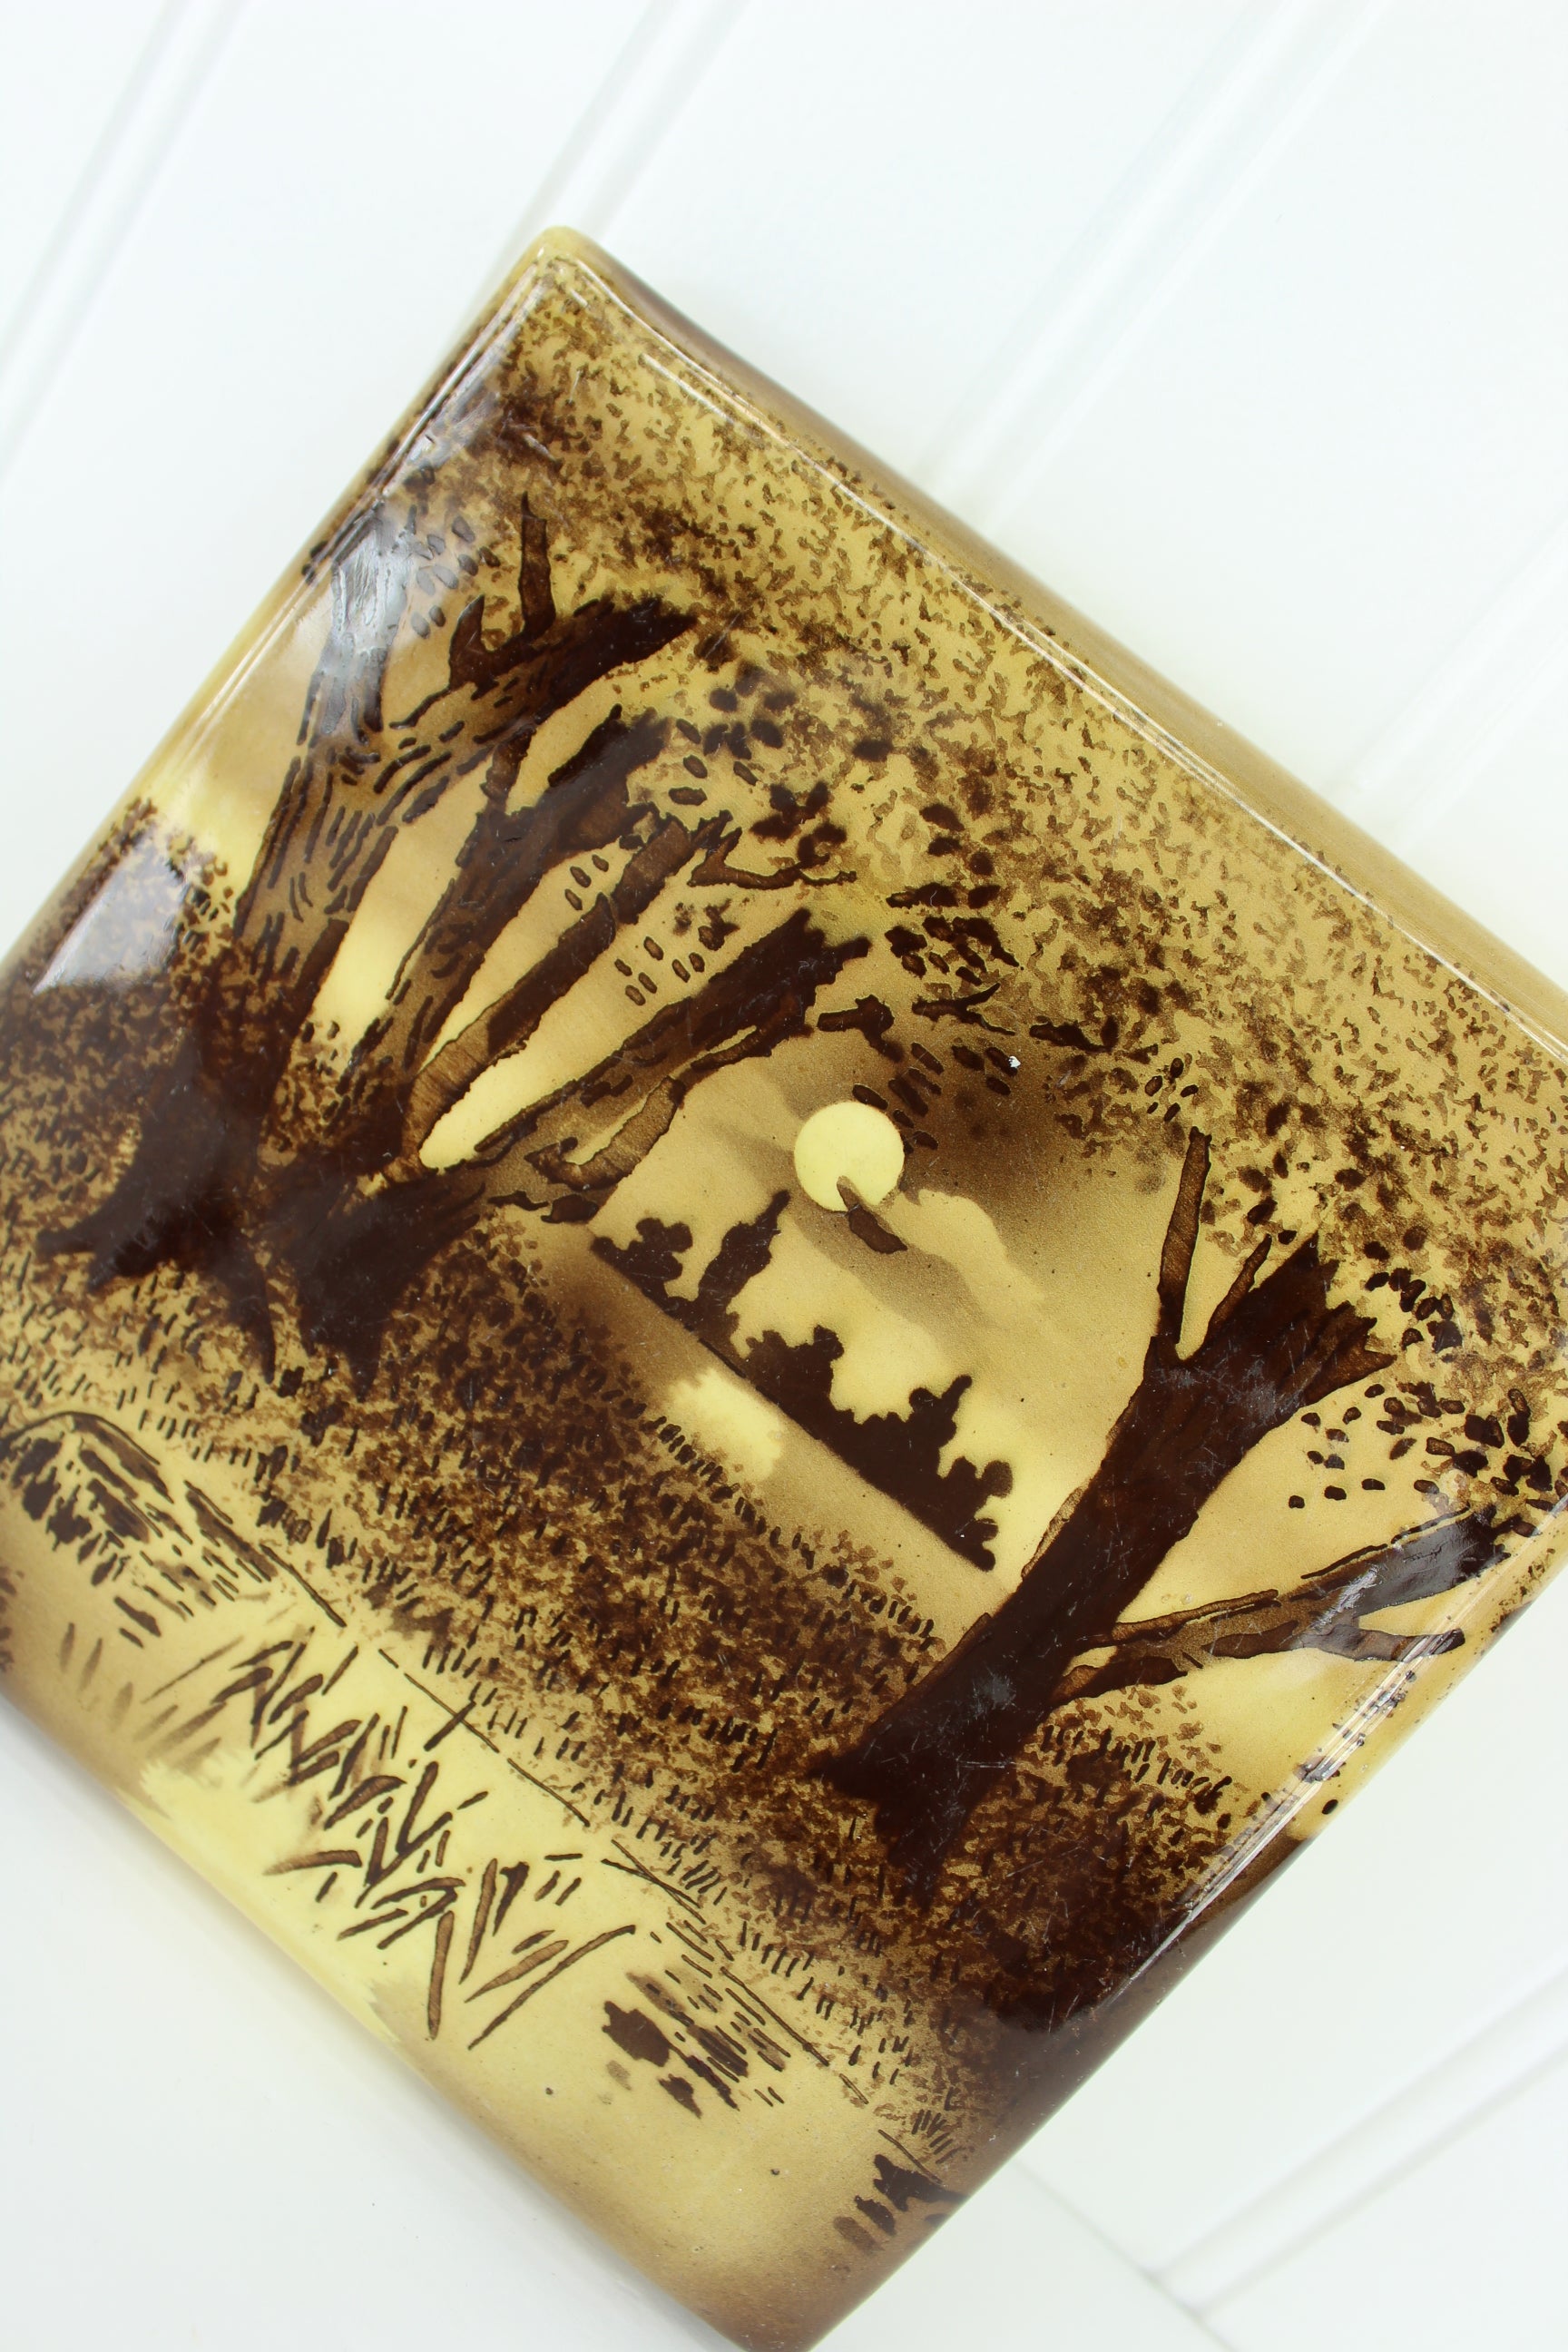 Ceramic Footed Trivet - Moonlight Woods Scene Browns Yellows 6" elegant ceramic